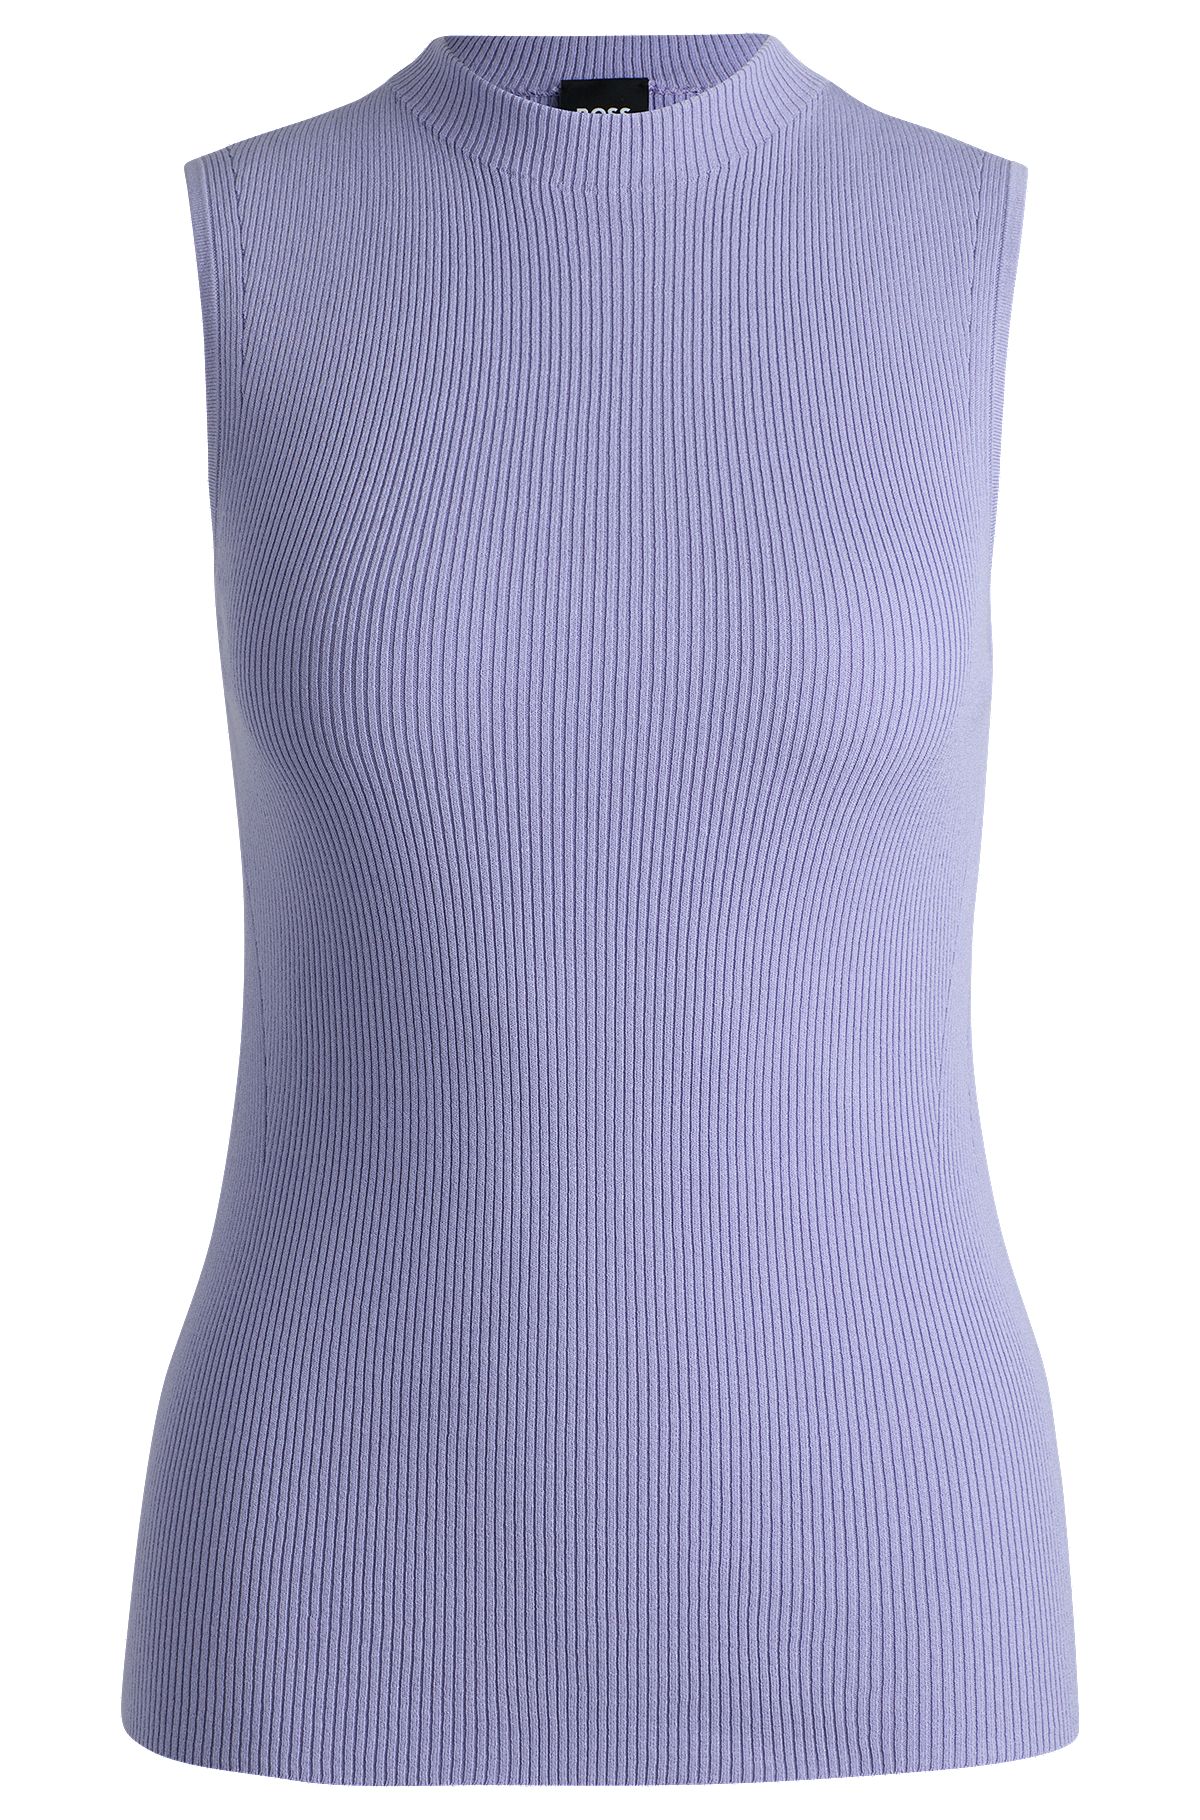 Sleeveless mock-neck top in ribbed fabric, Light Purple